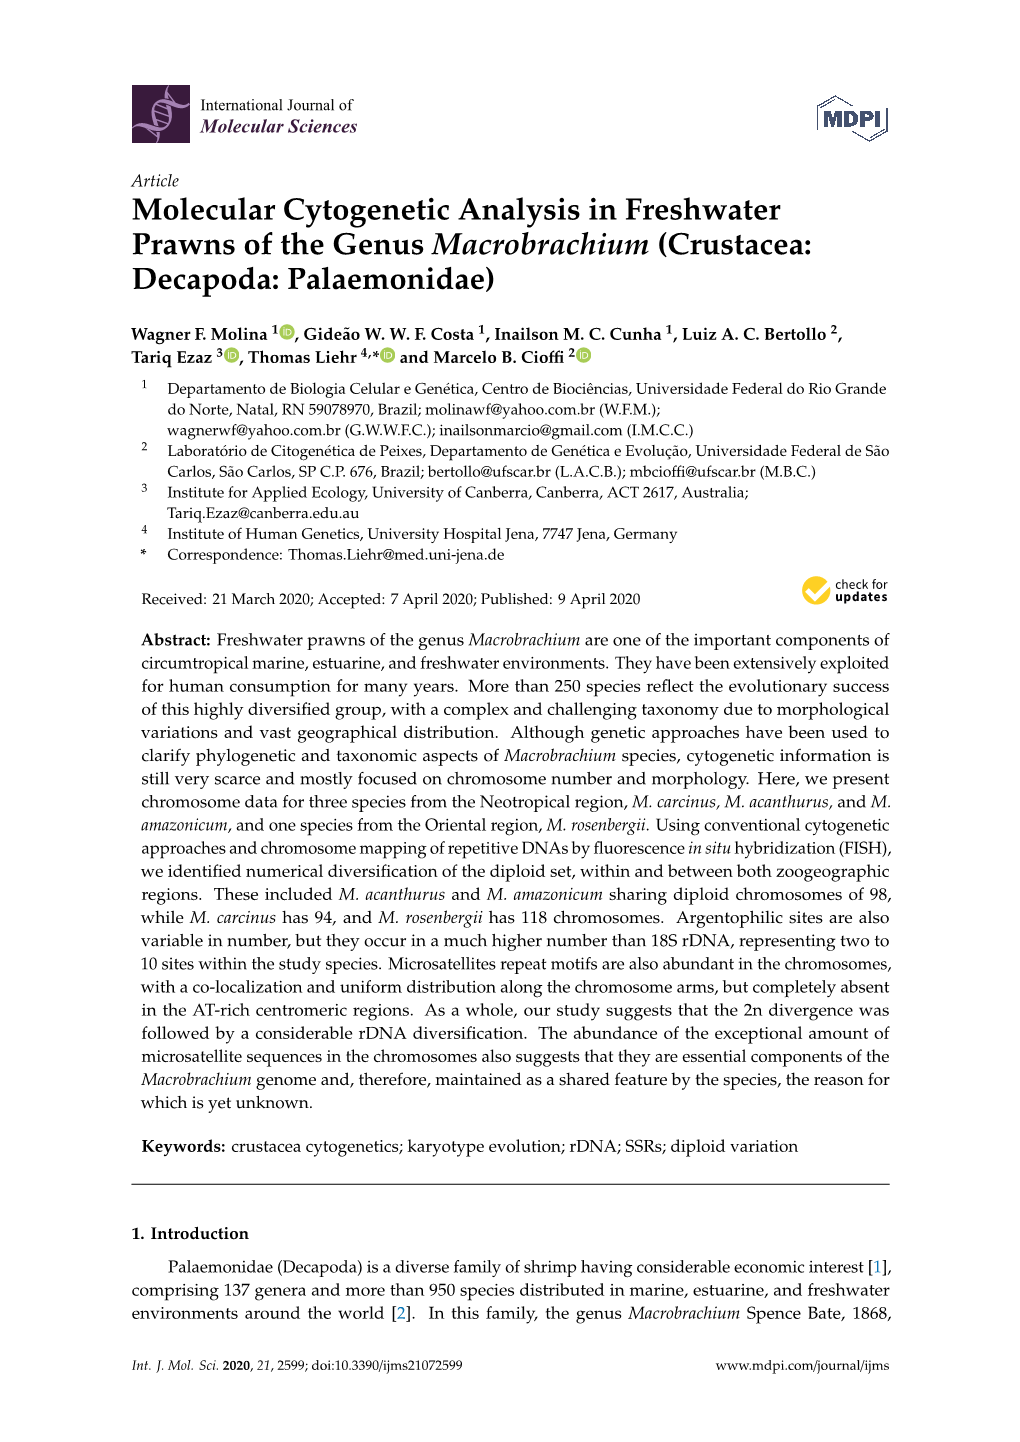 Molecular Cytogenetic Analysis in Freshwater Prawns of the Genus Macrobrachium (Crustacea: Decapoda: Palaemonidae)